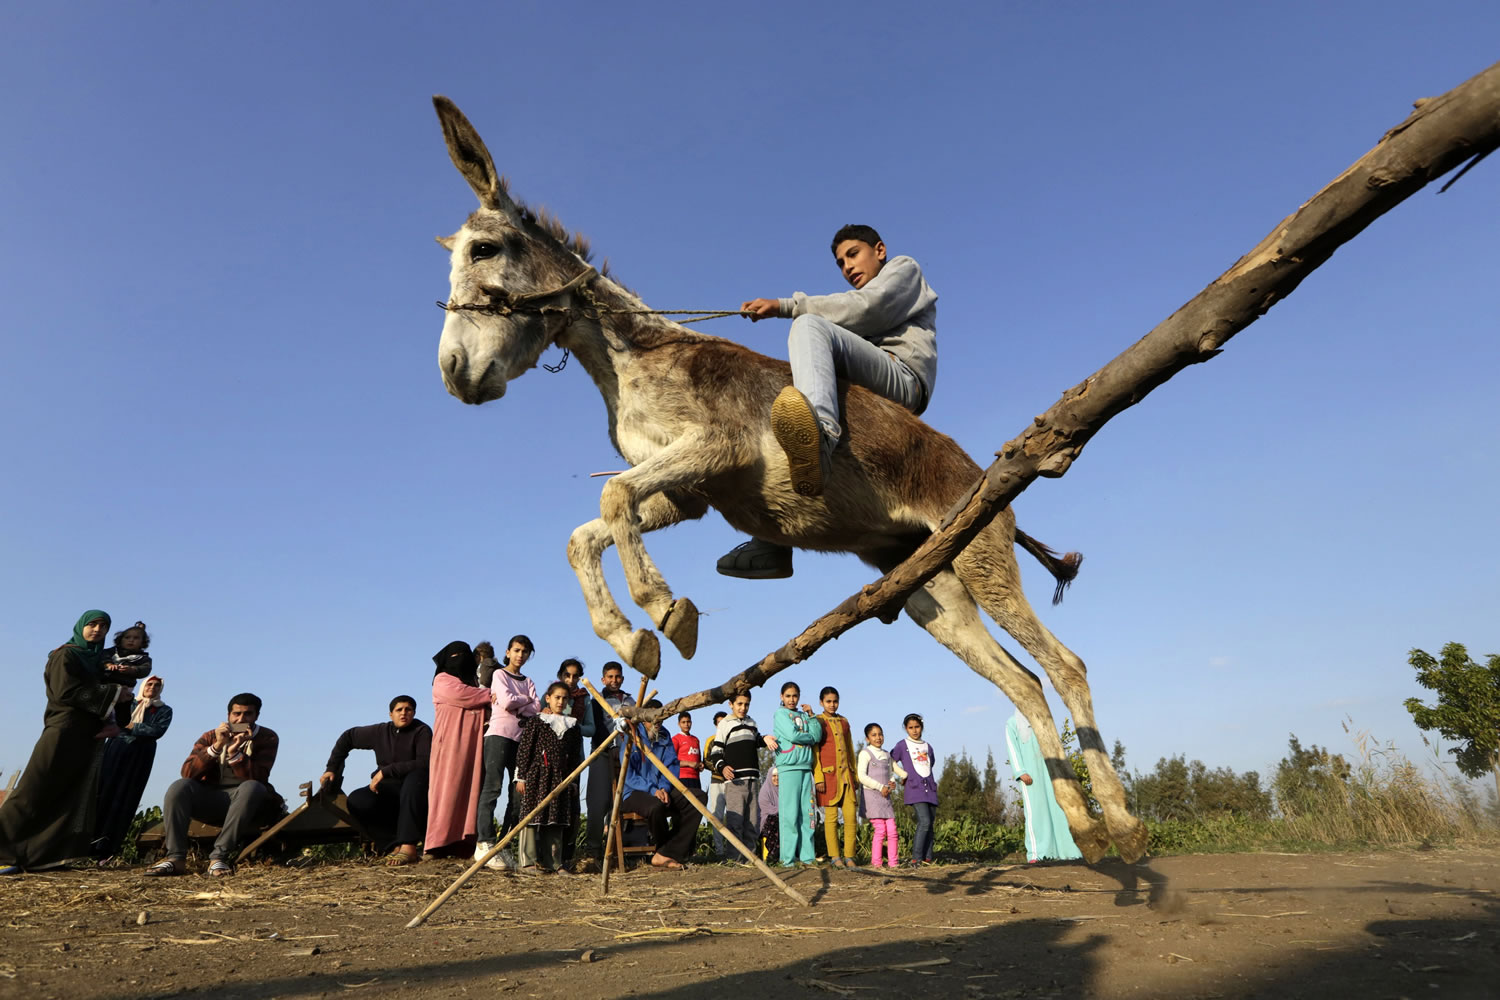 Egyptian farmer Ahmed Ayman, 14, jumps his trained donkey over a barrier Feb. 5 in Al-Arid, Egypt.